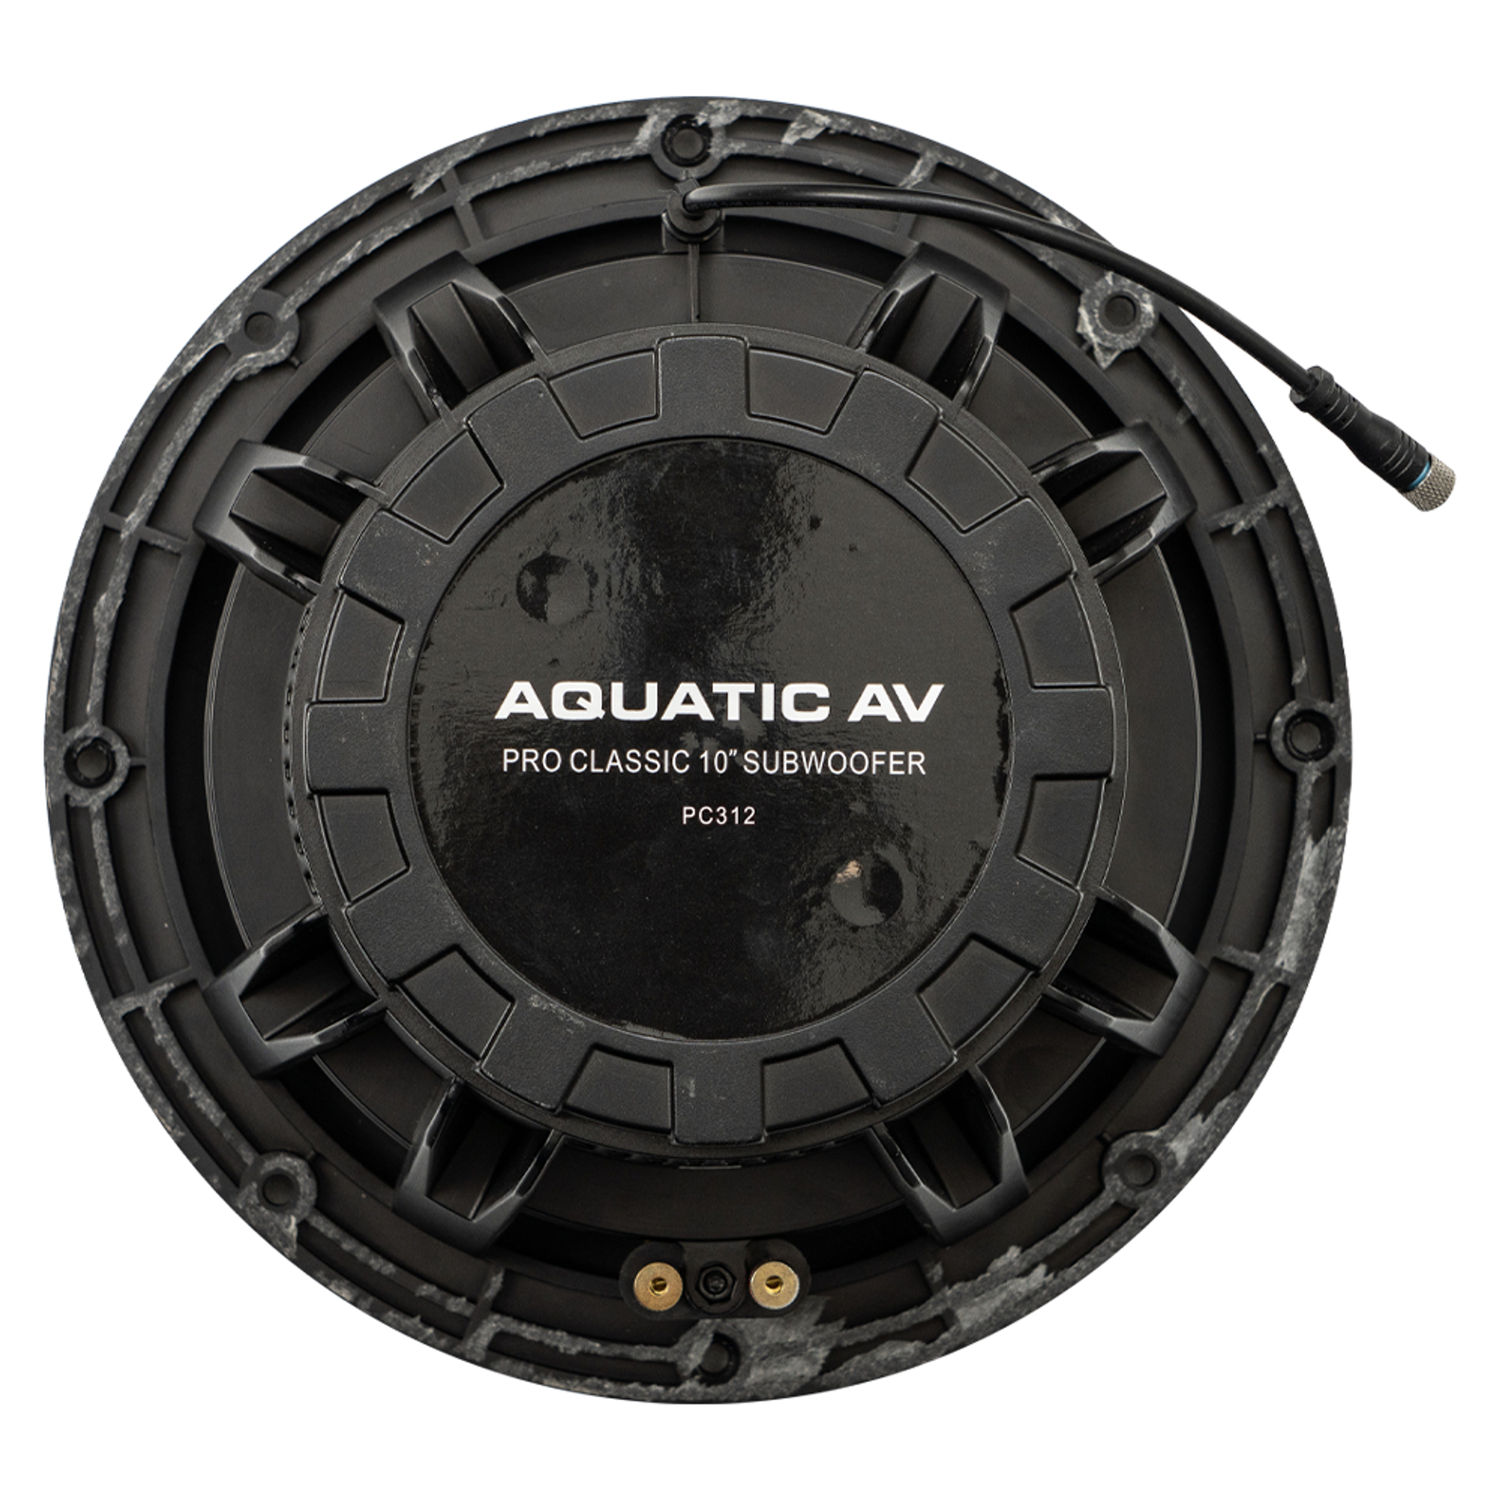 Aquatic AV 10" Pro Classic Subwoofer Black